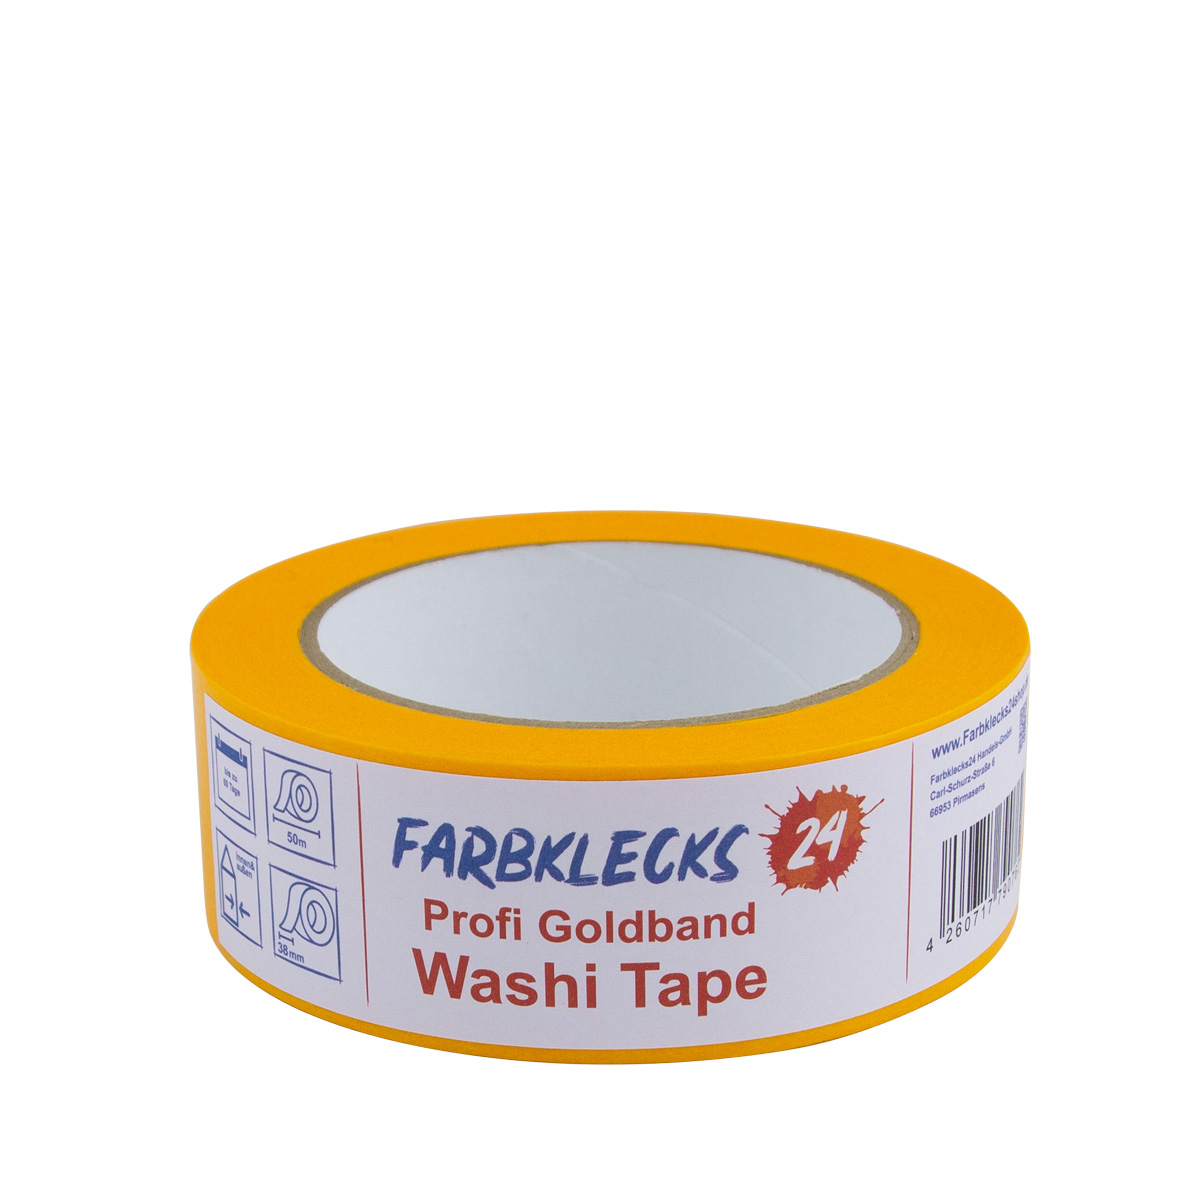 Farbklecks24 Profi Goldband Washi Tape 50m UV60 38mm